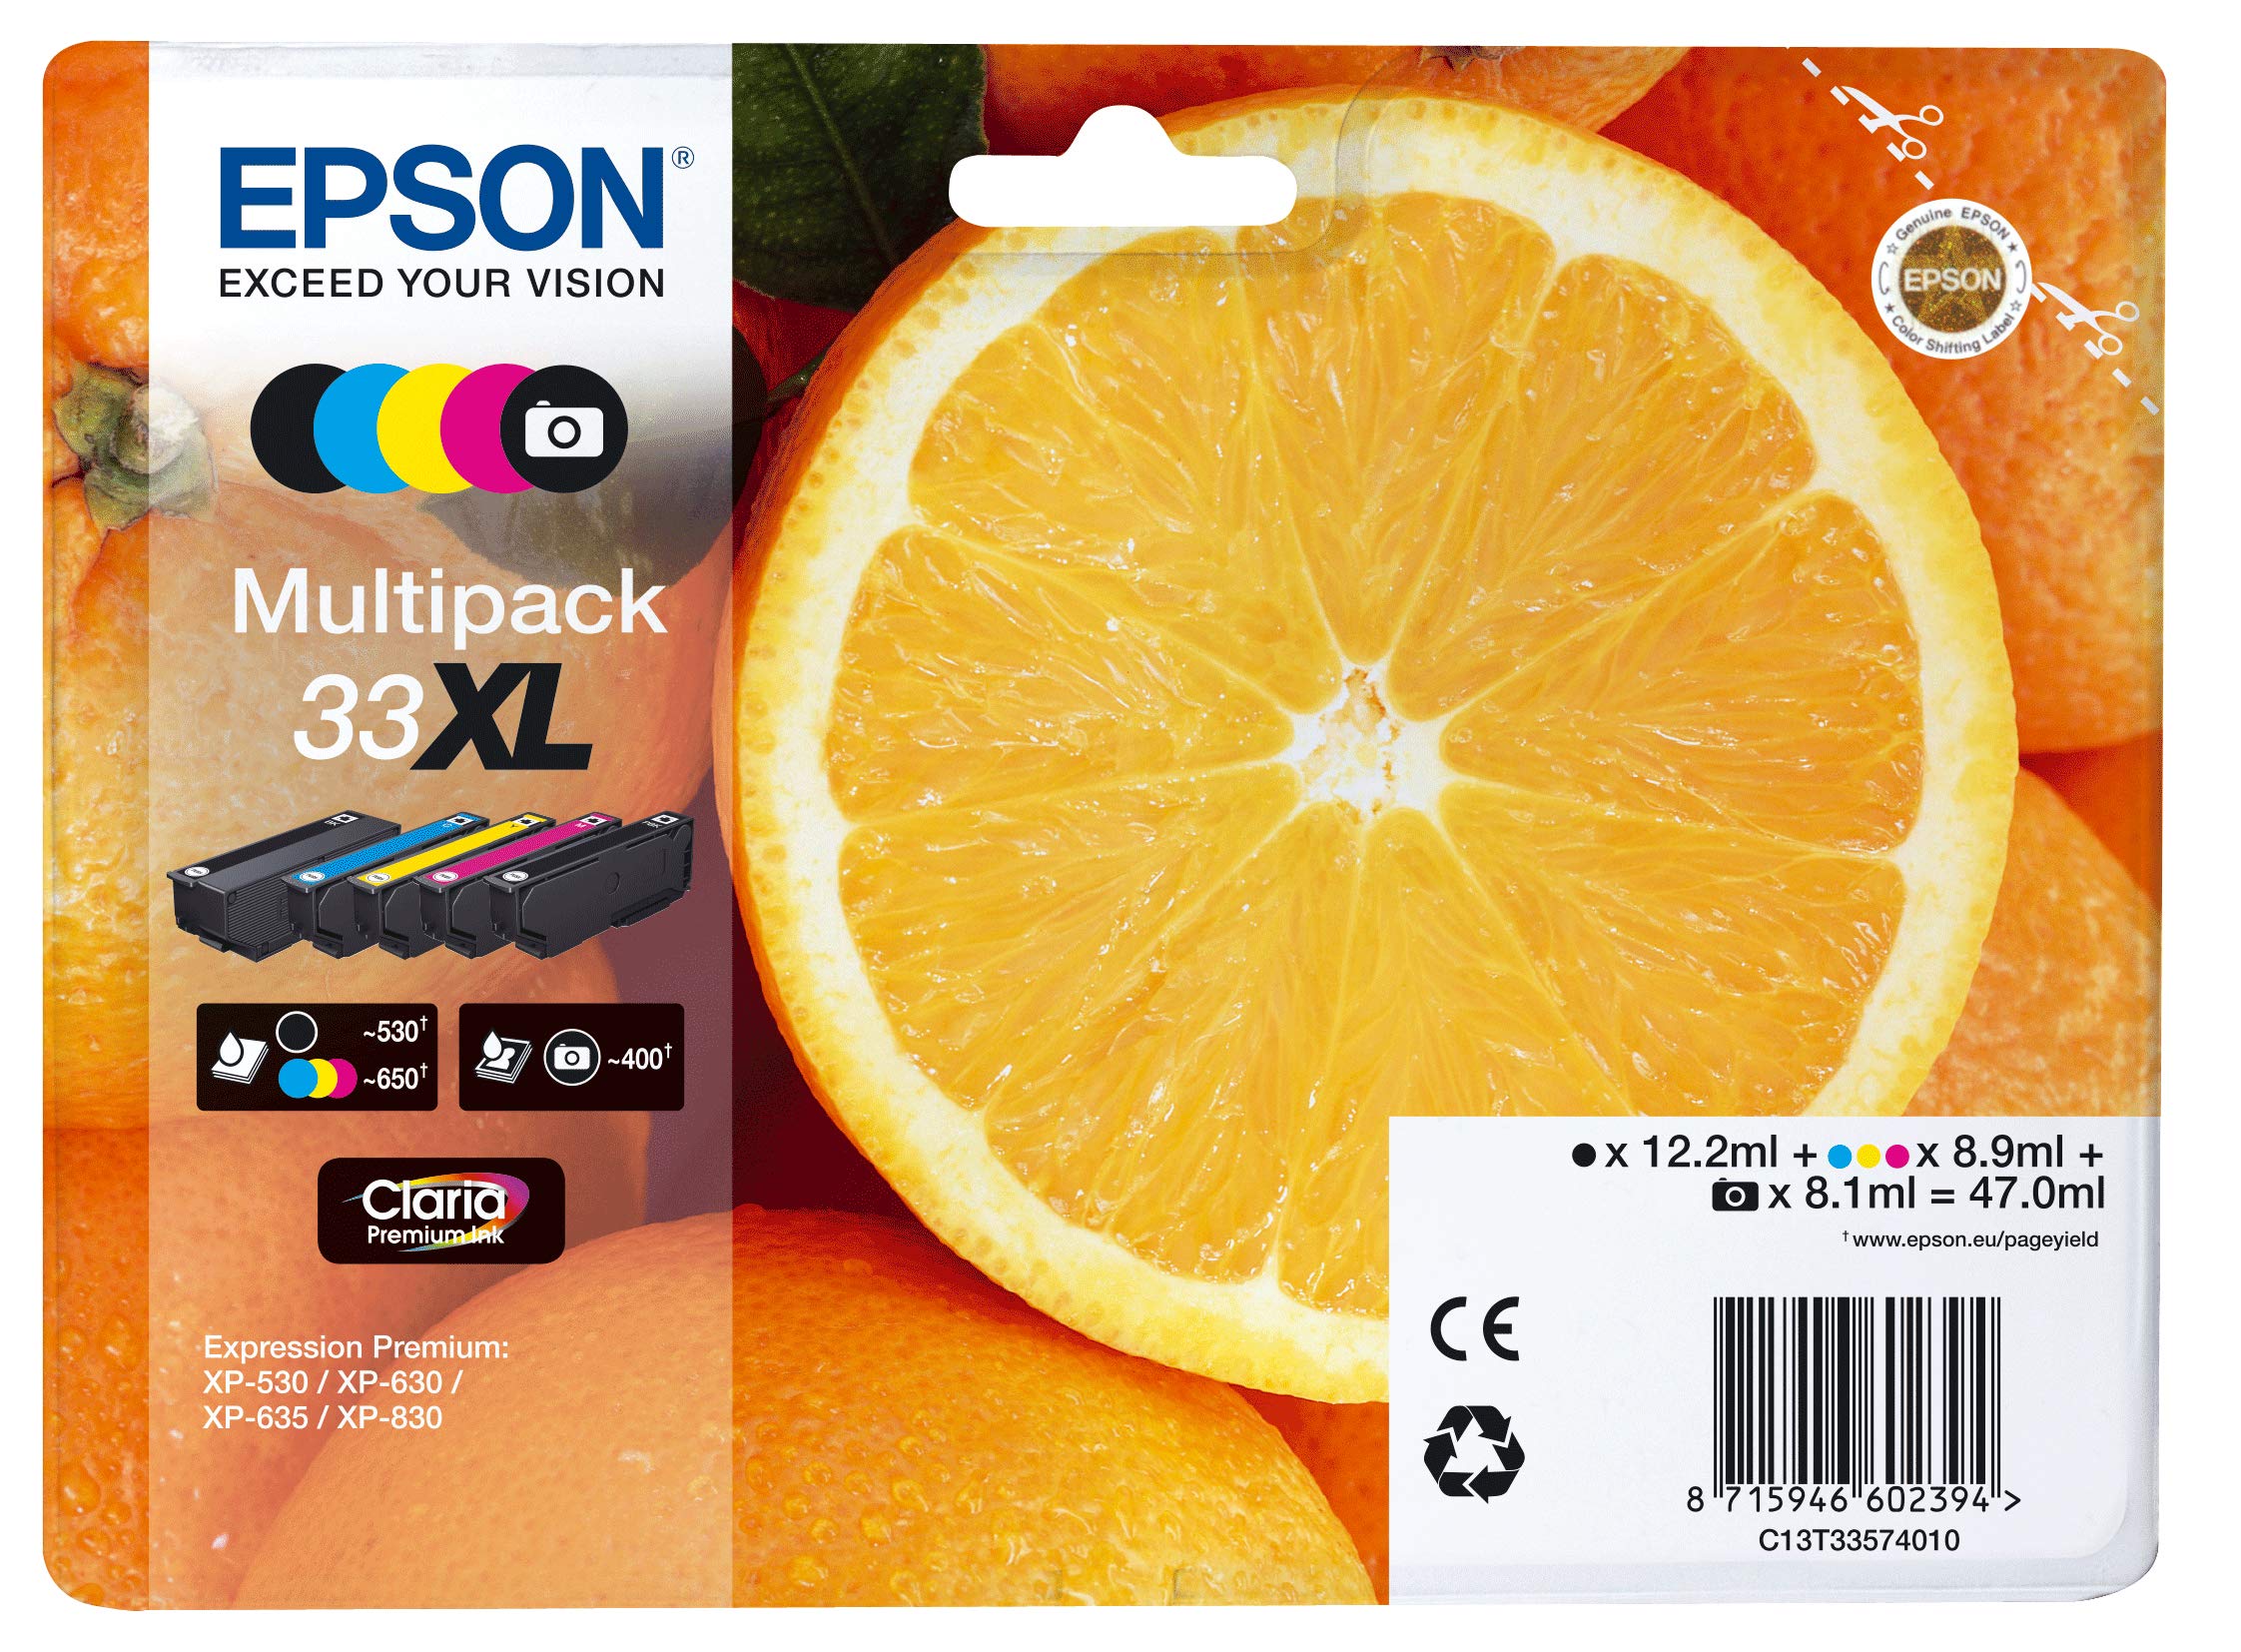 Multipack Epson t335740 5 colori n.33xl